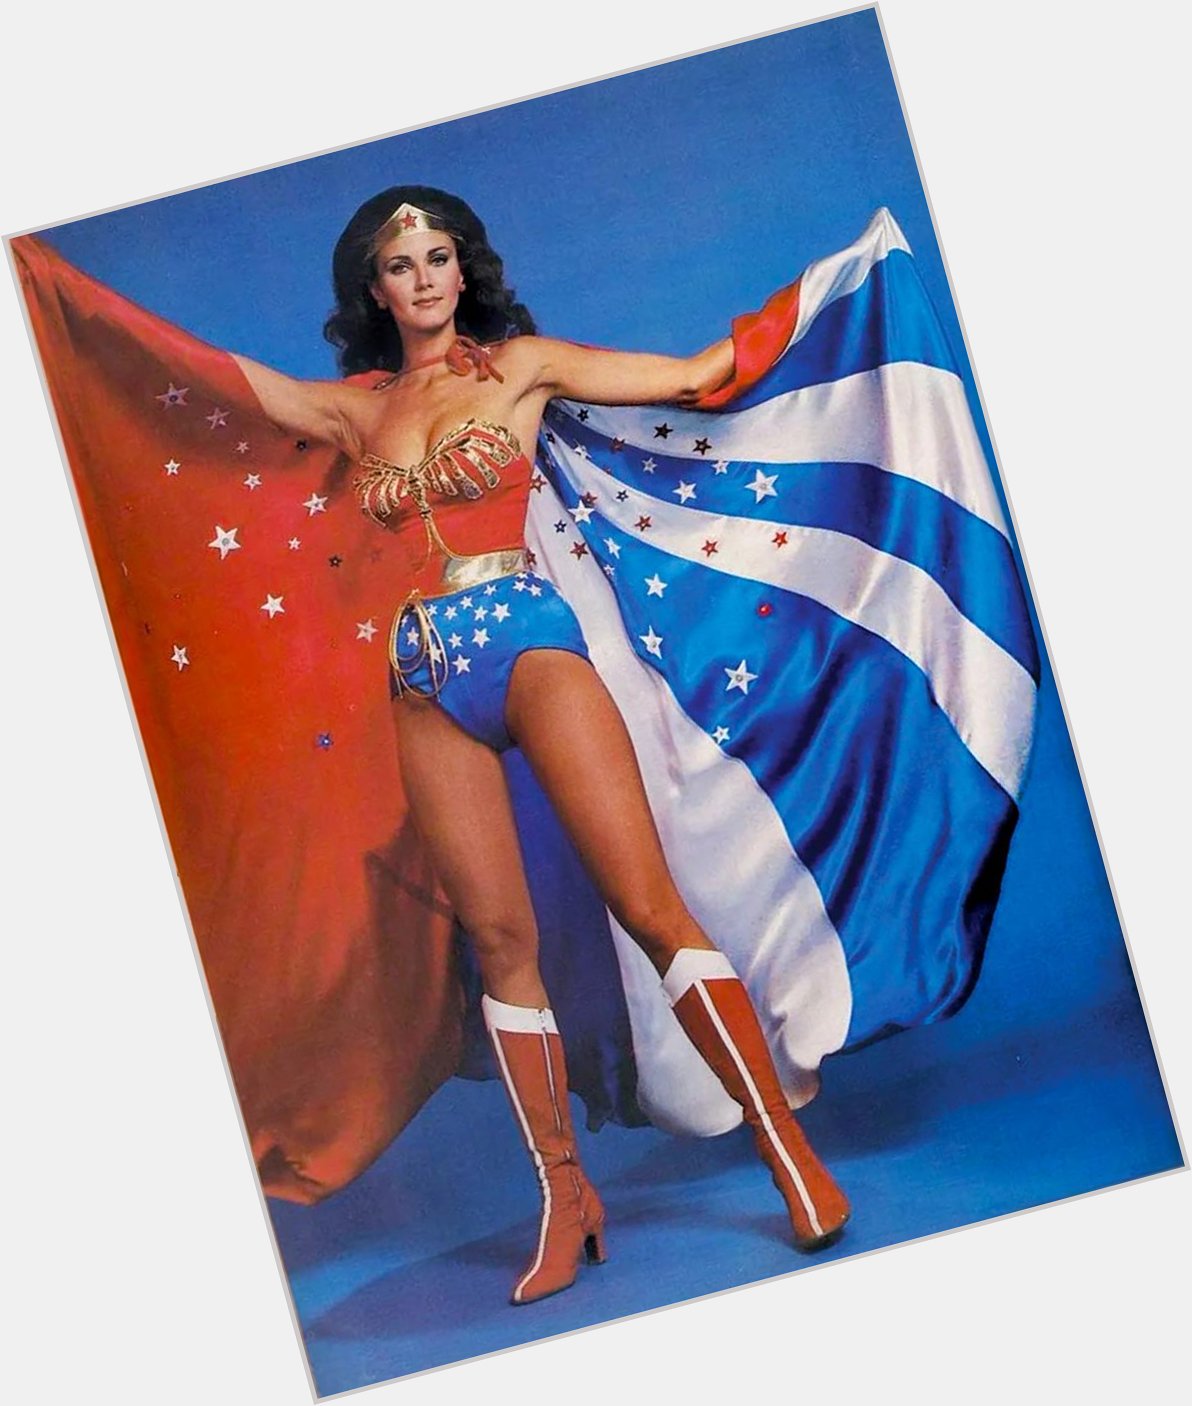  Happy birthday! Lynda Carter (Wonder Woman) you\re the best 